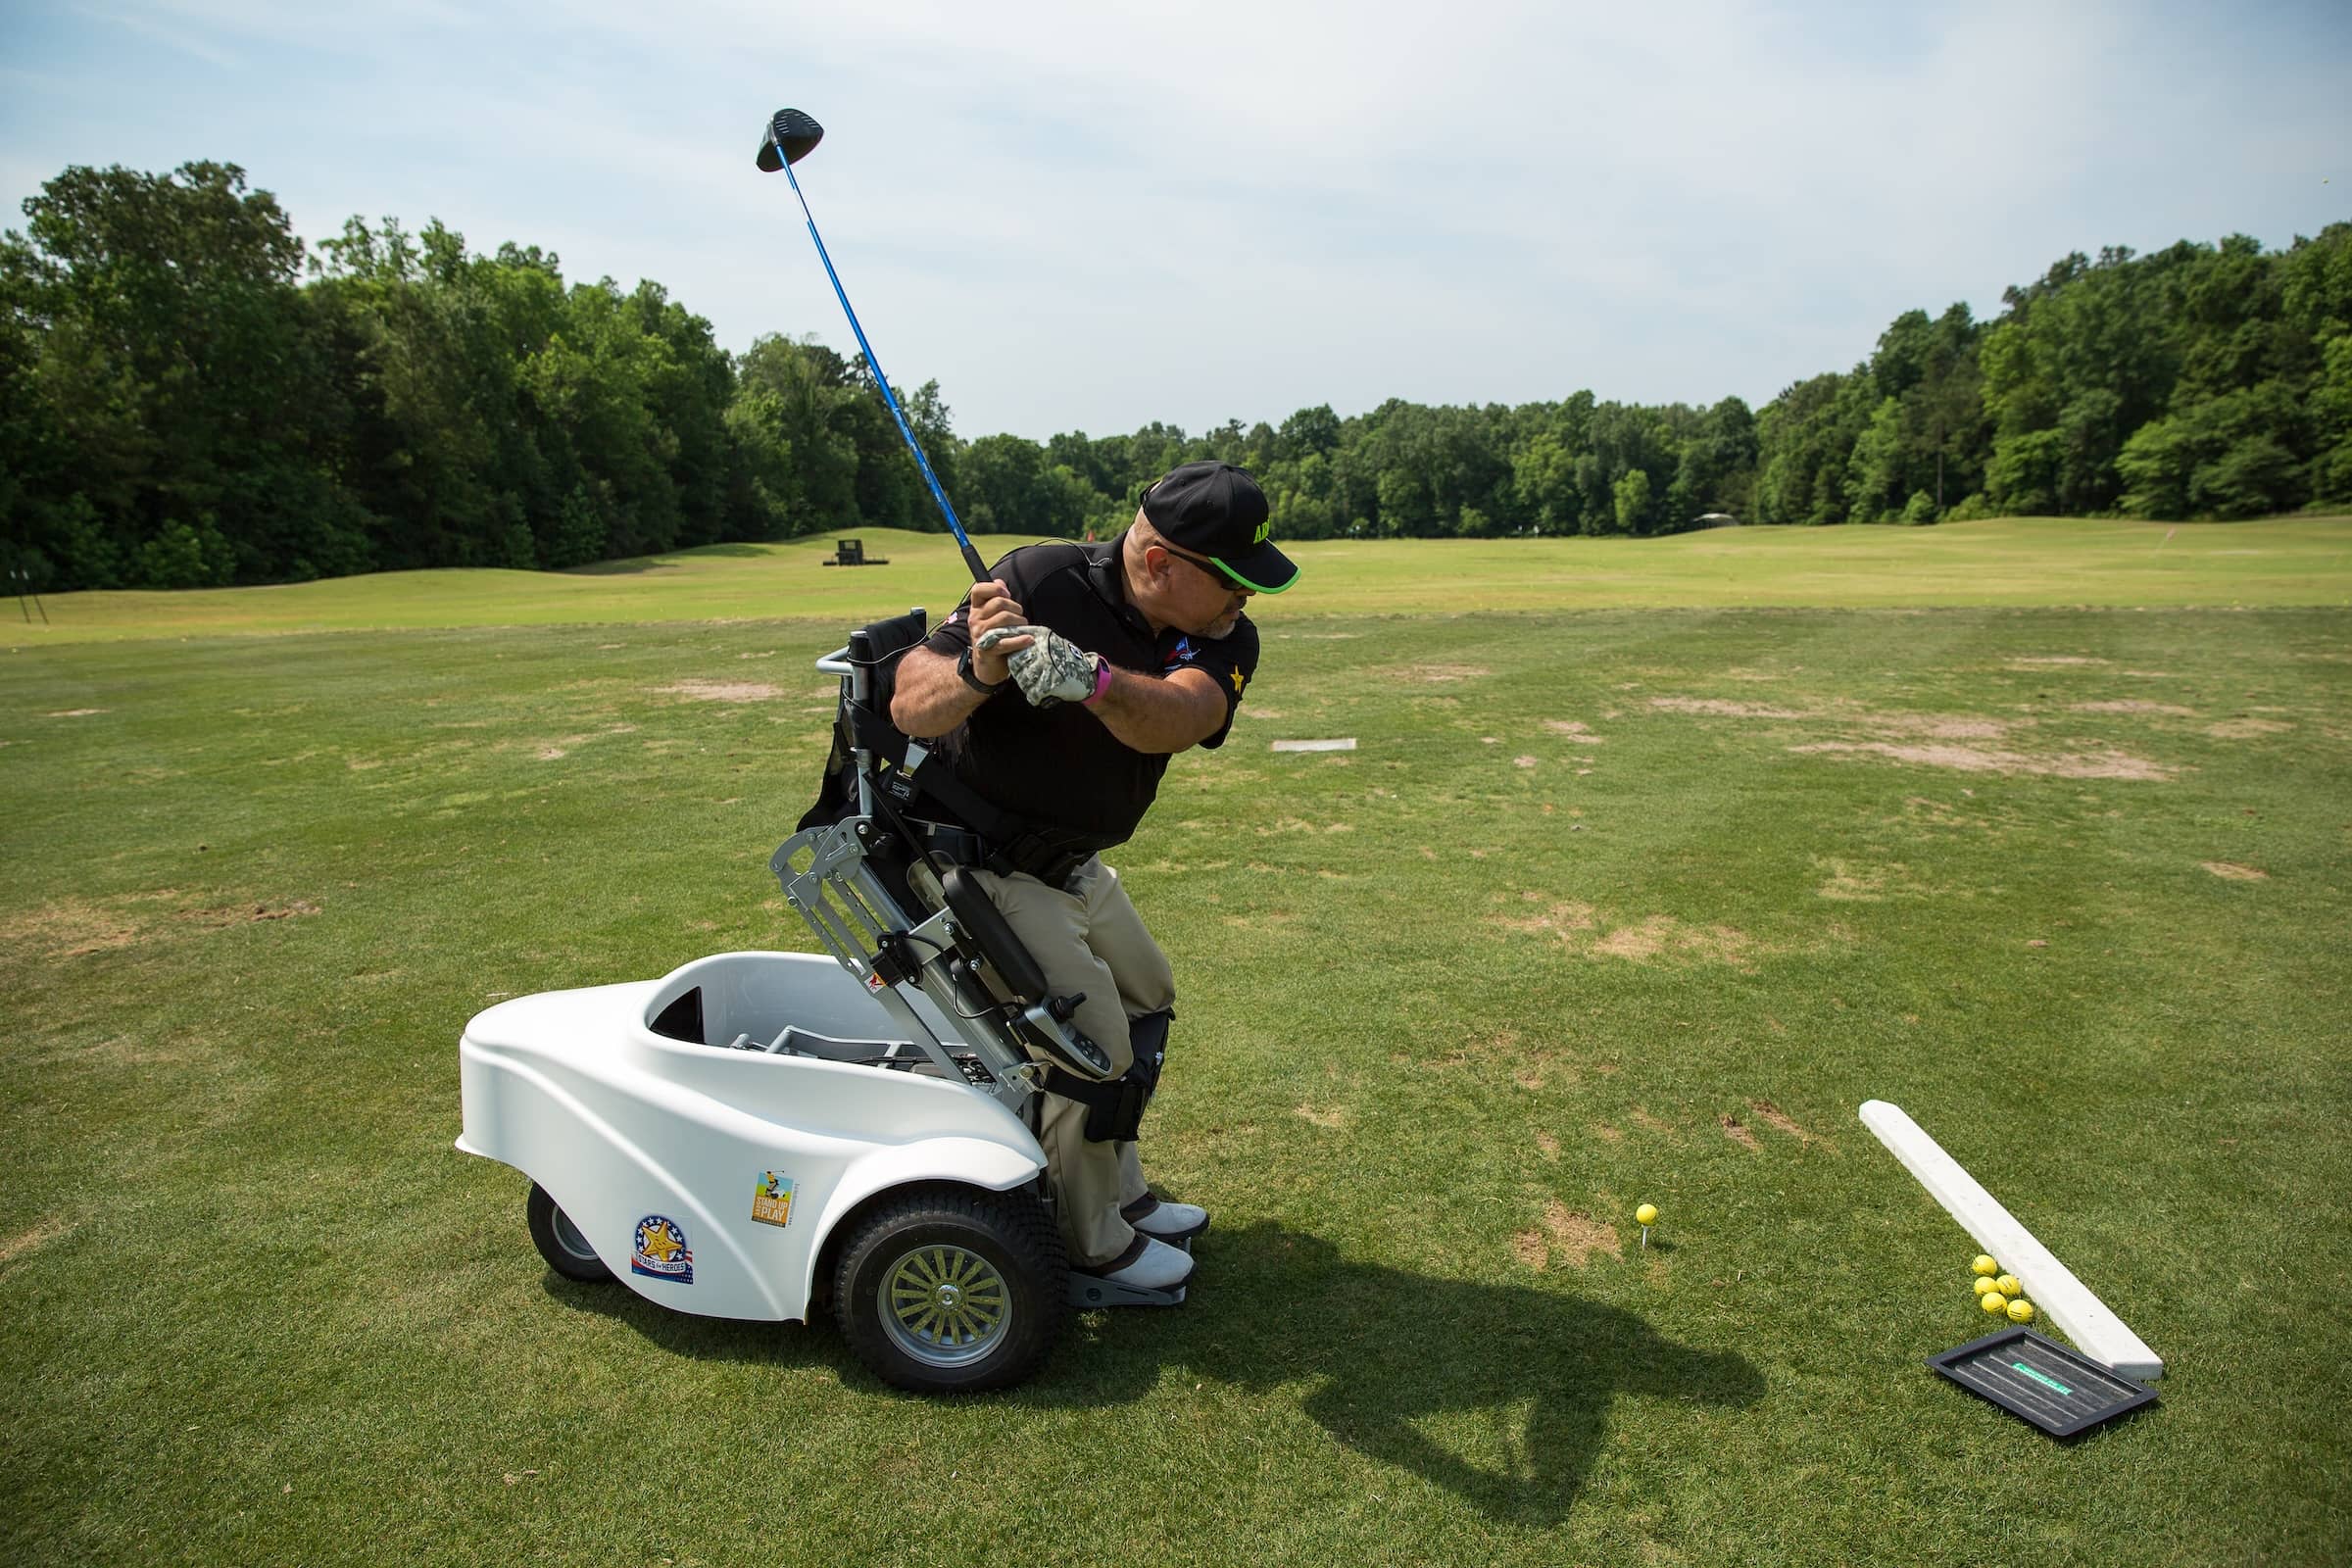 Disabled Military Veterans benefit at Wescott Golf through PGA partnership